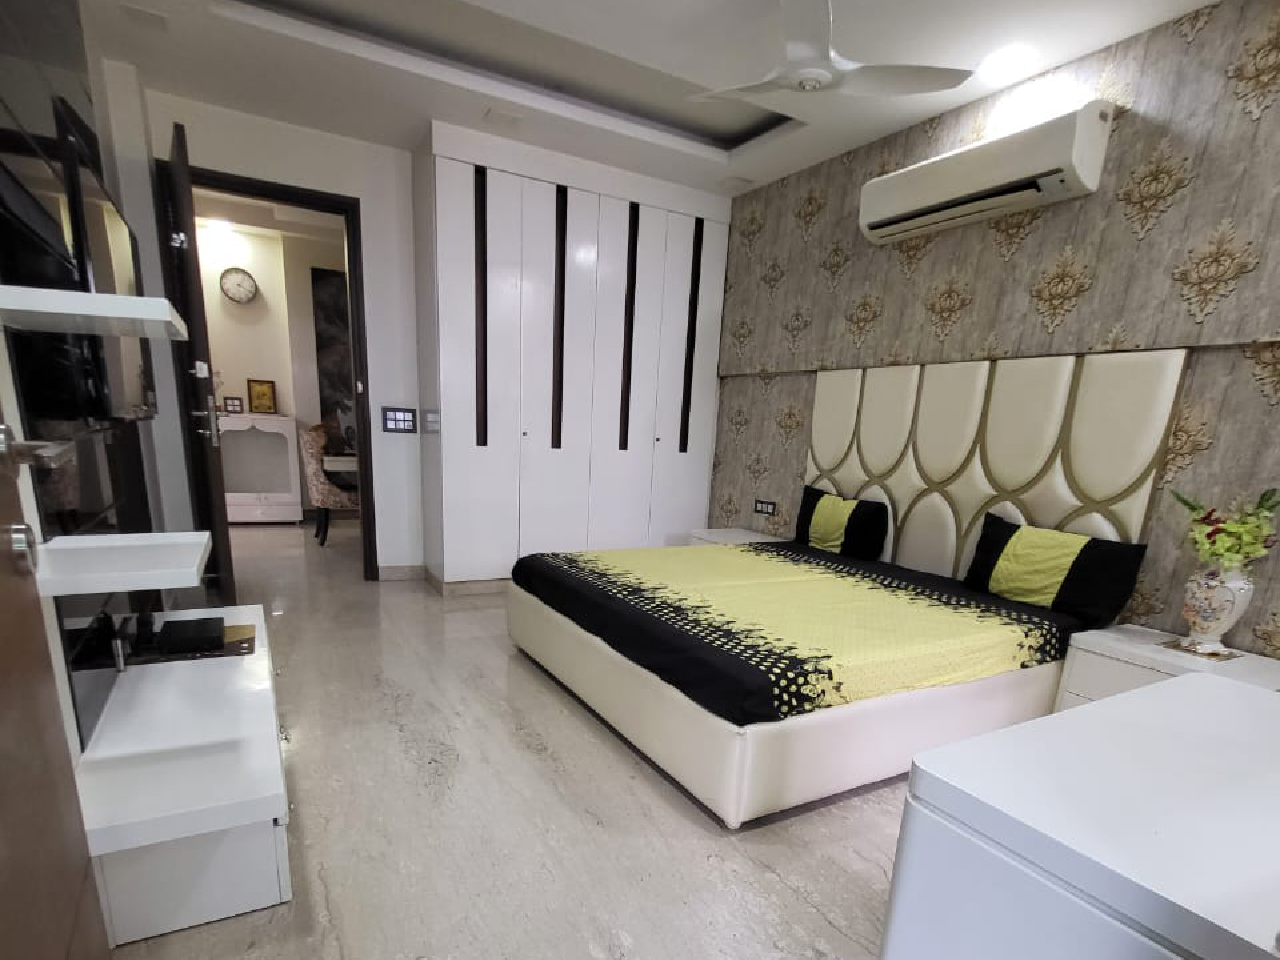 Service Apartment in vasant vihar Delhi